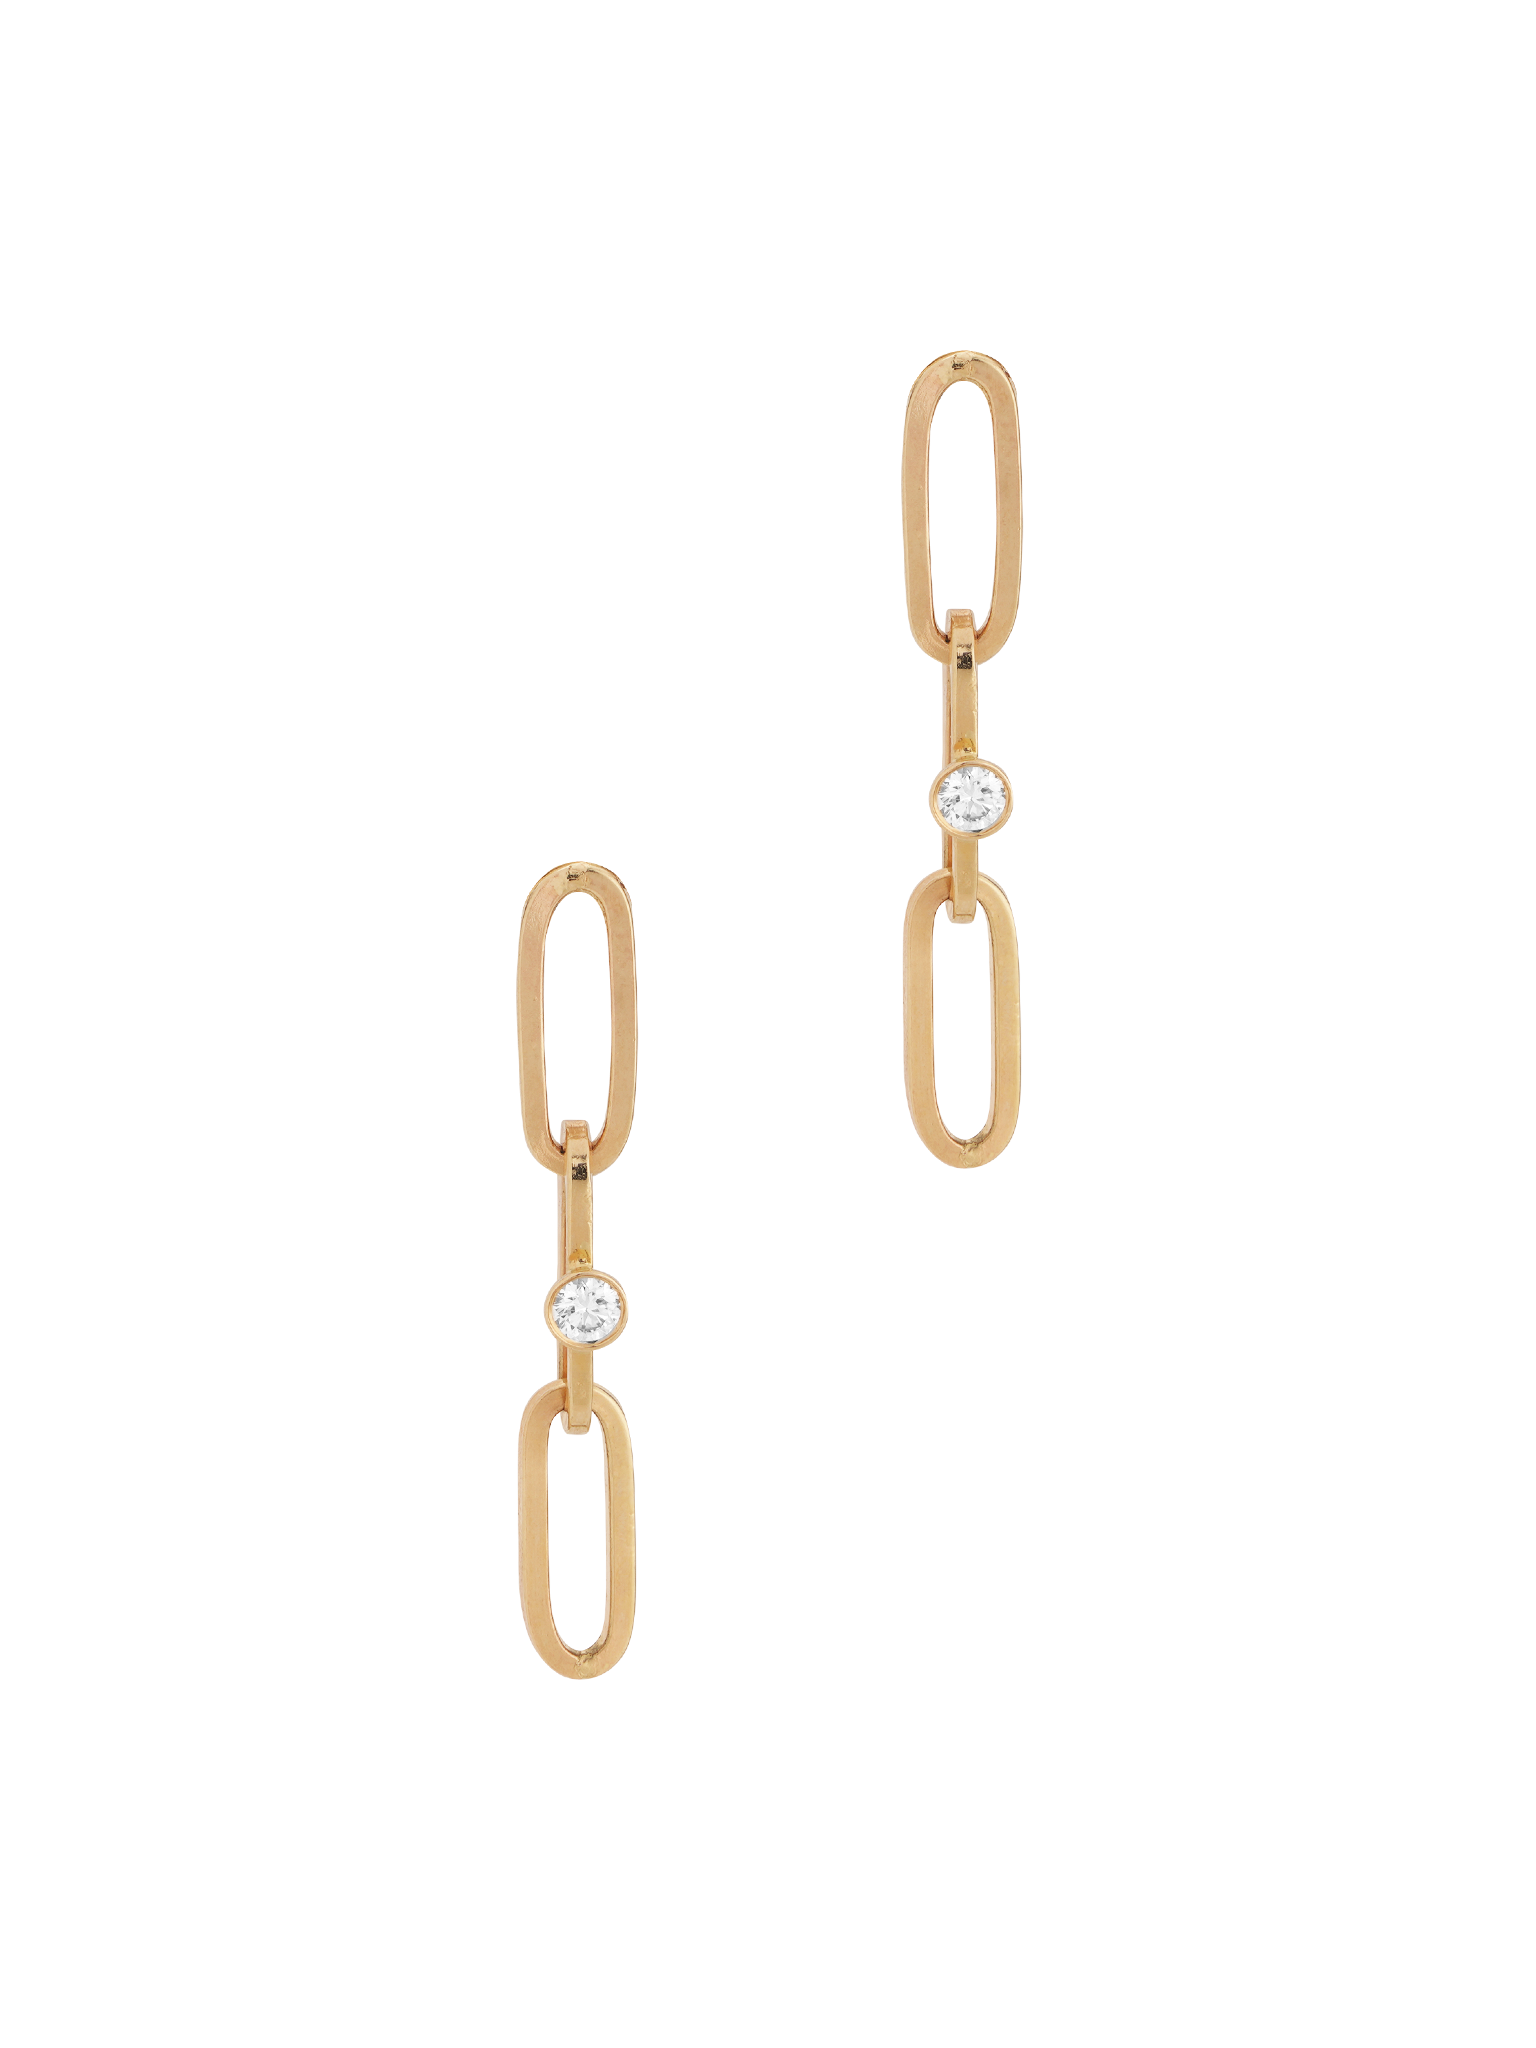 14k gold link dangled earrings with diamonds